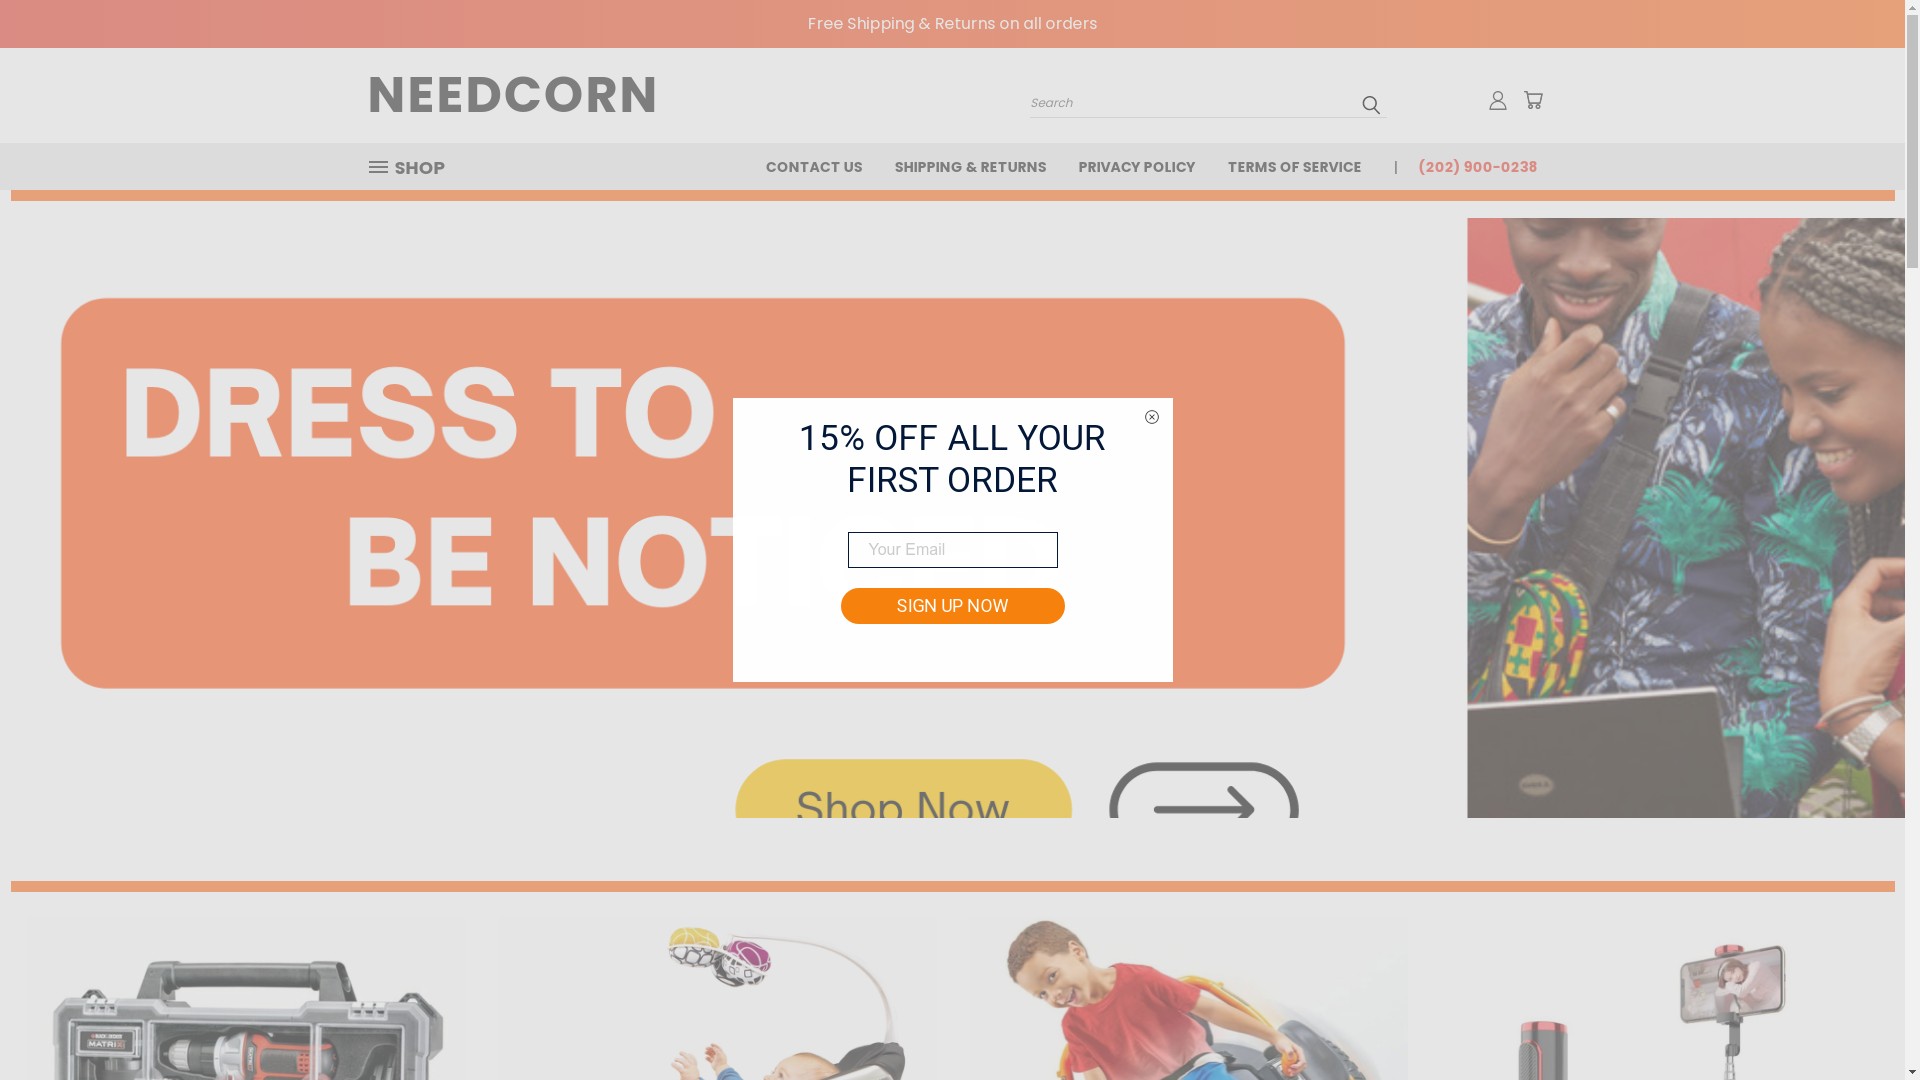 Needcorn at needcorn.com